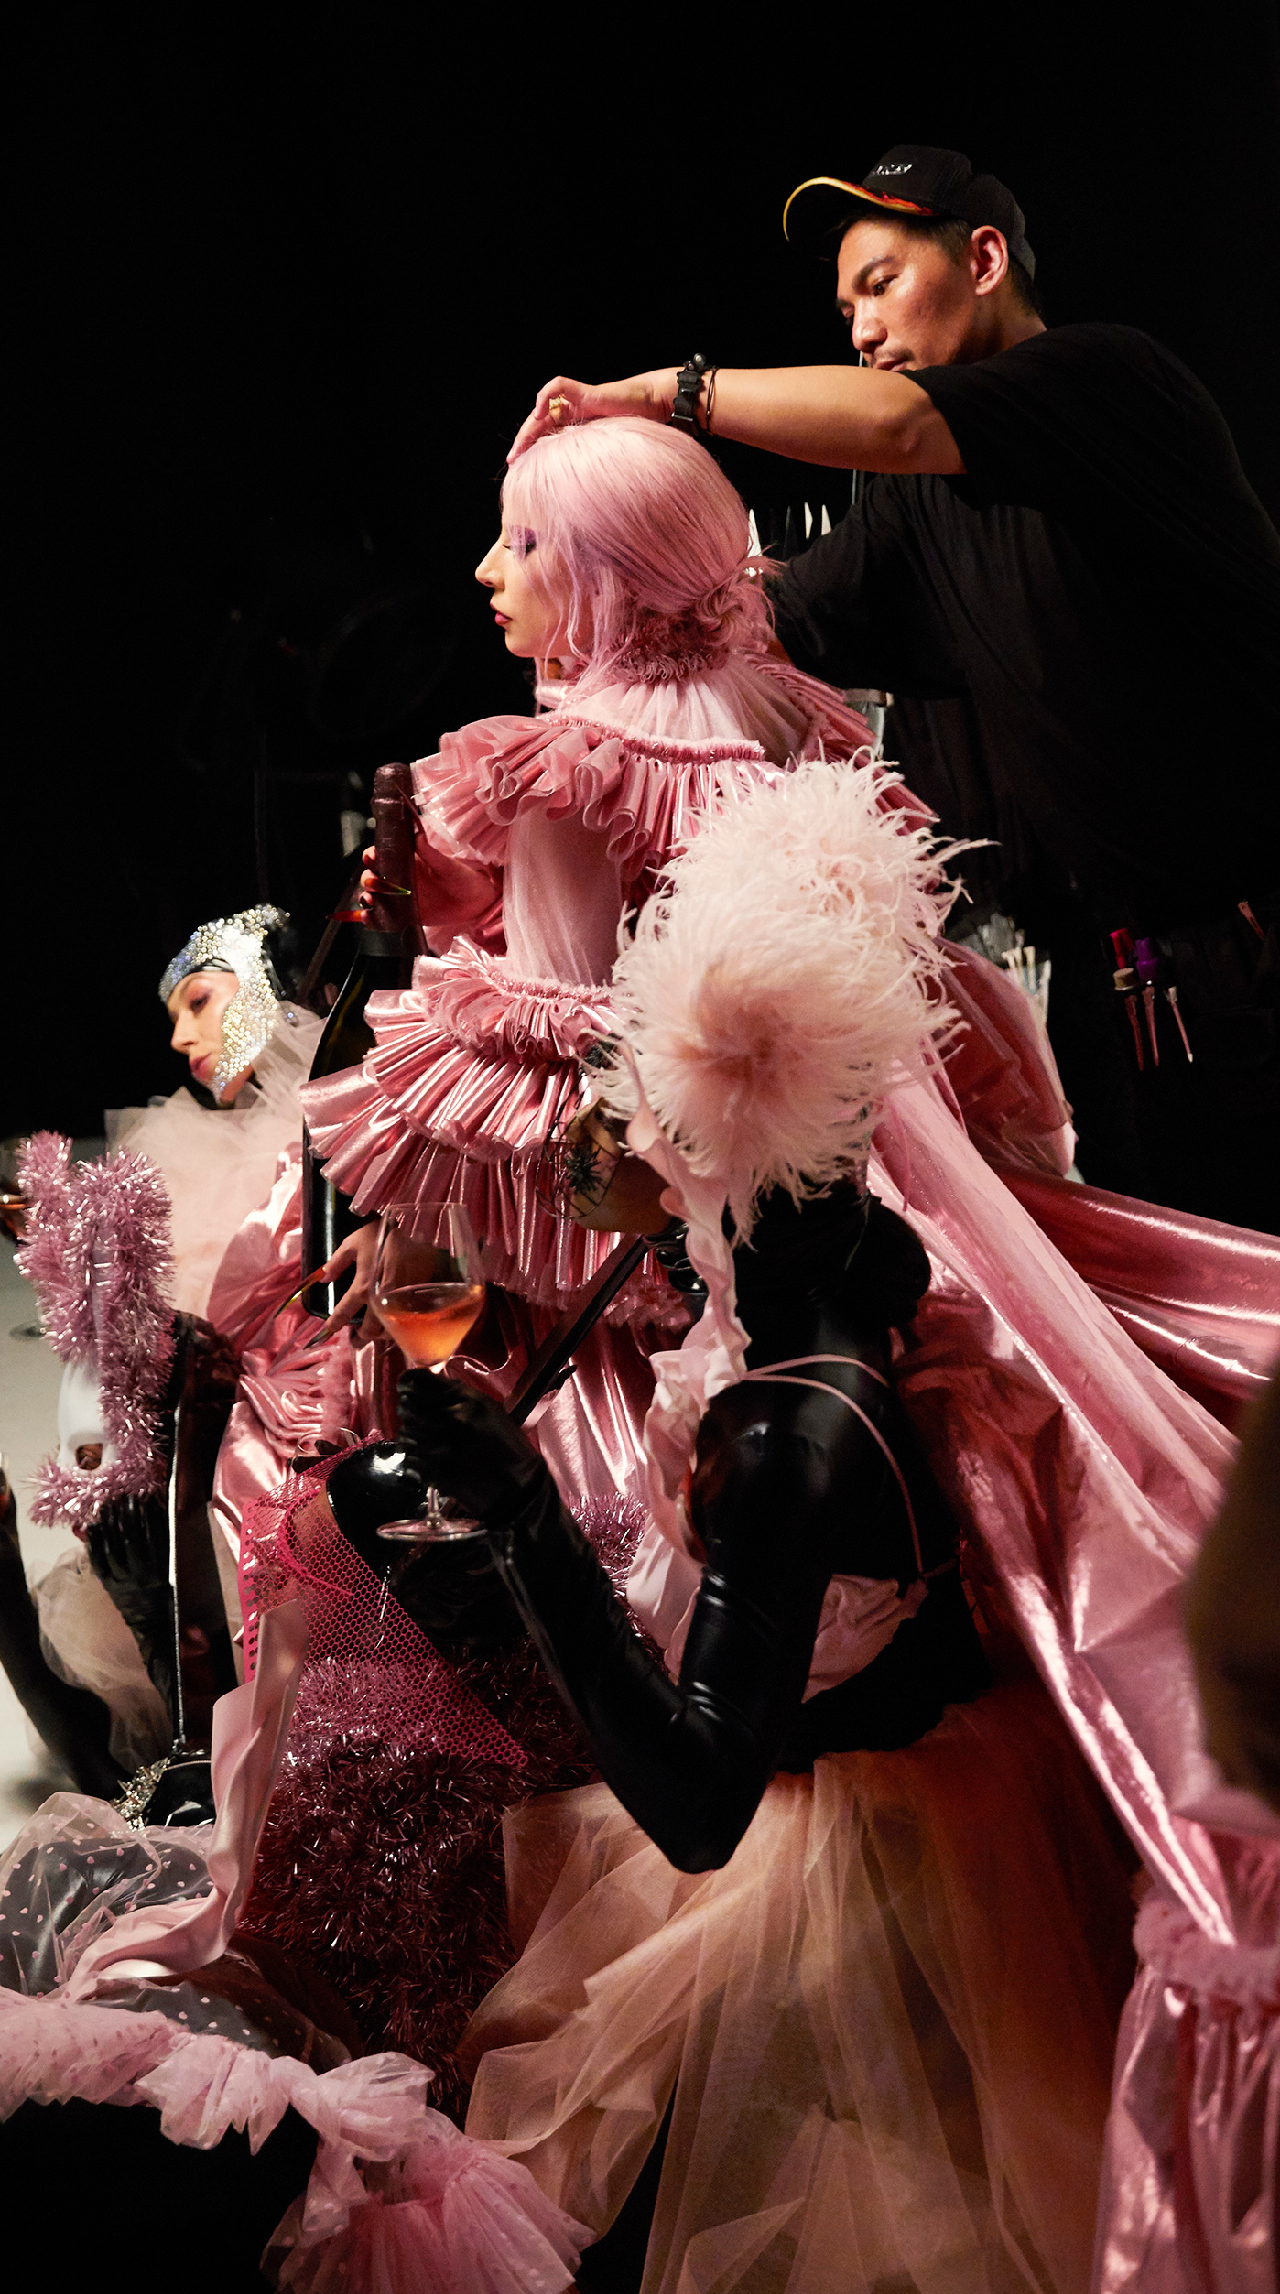 Dom Pérignon Lady Gaga Rosé 2008